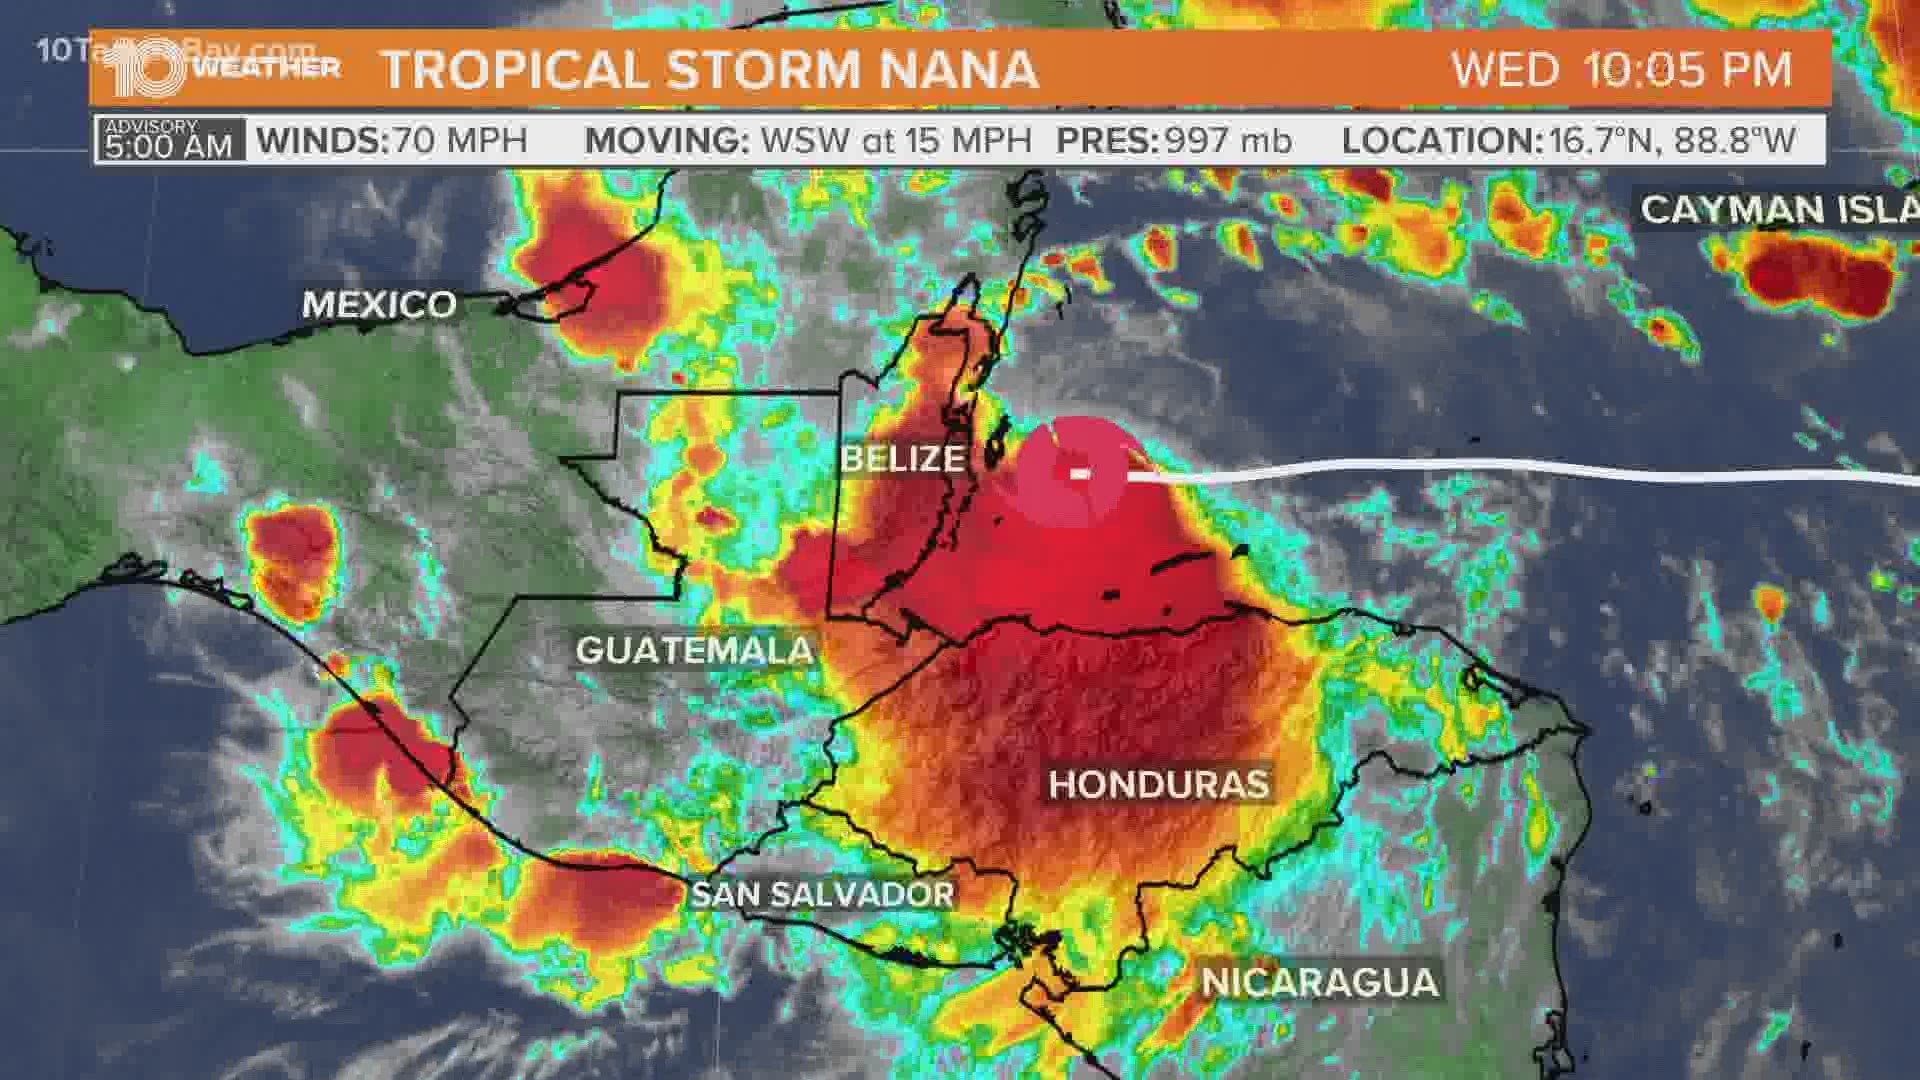 Tracking the tropics Peak hurricane season is September 10